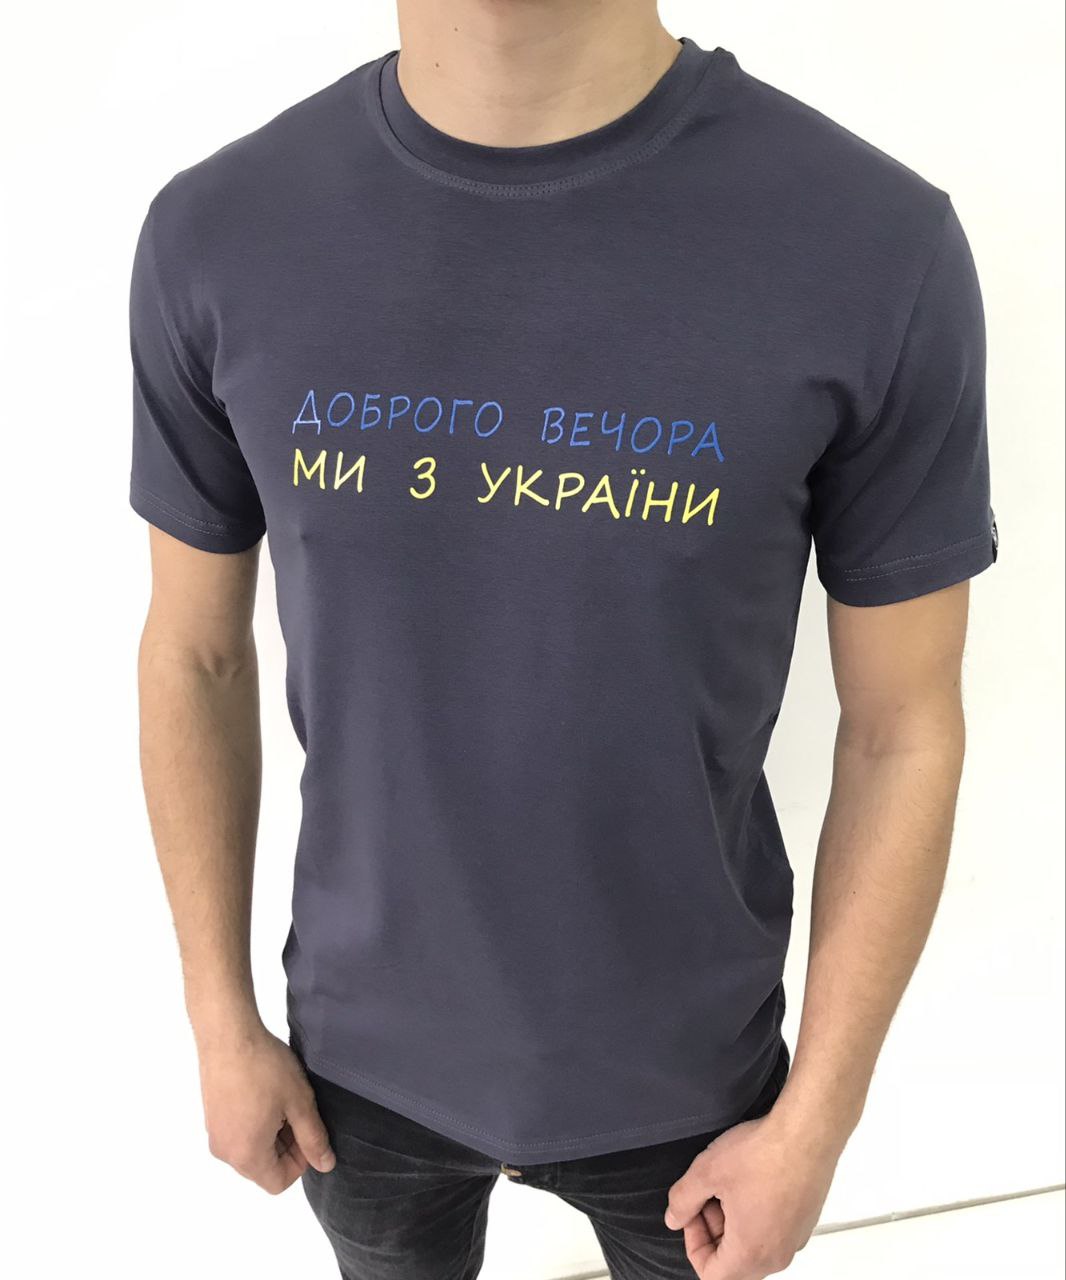 Мужская футболка ми з україни 40187